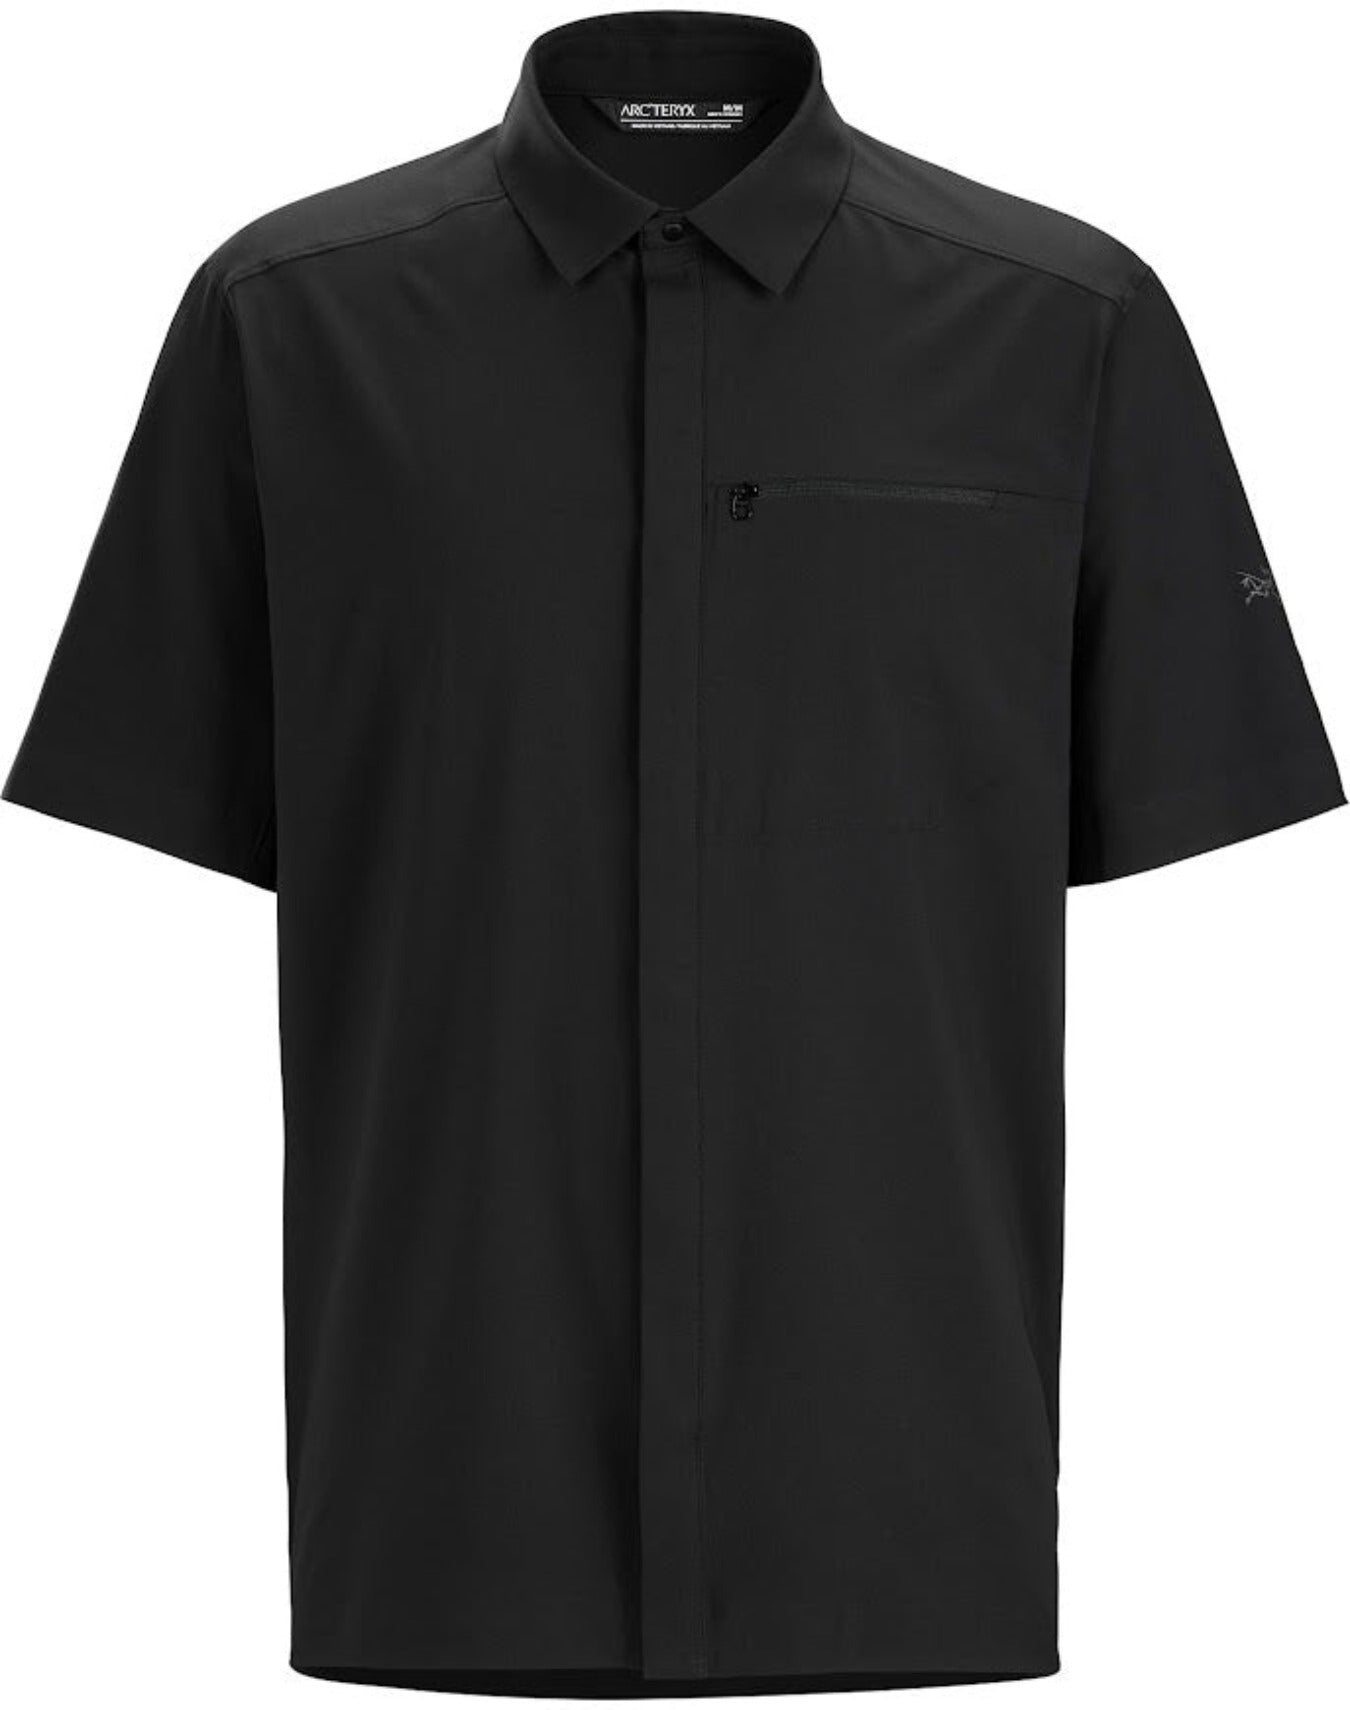 Shop ARC'TERYX 2023 SS Plain Short Sleeves Outdoor Shirts by piwakawaka33